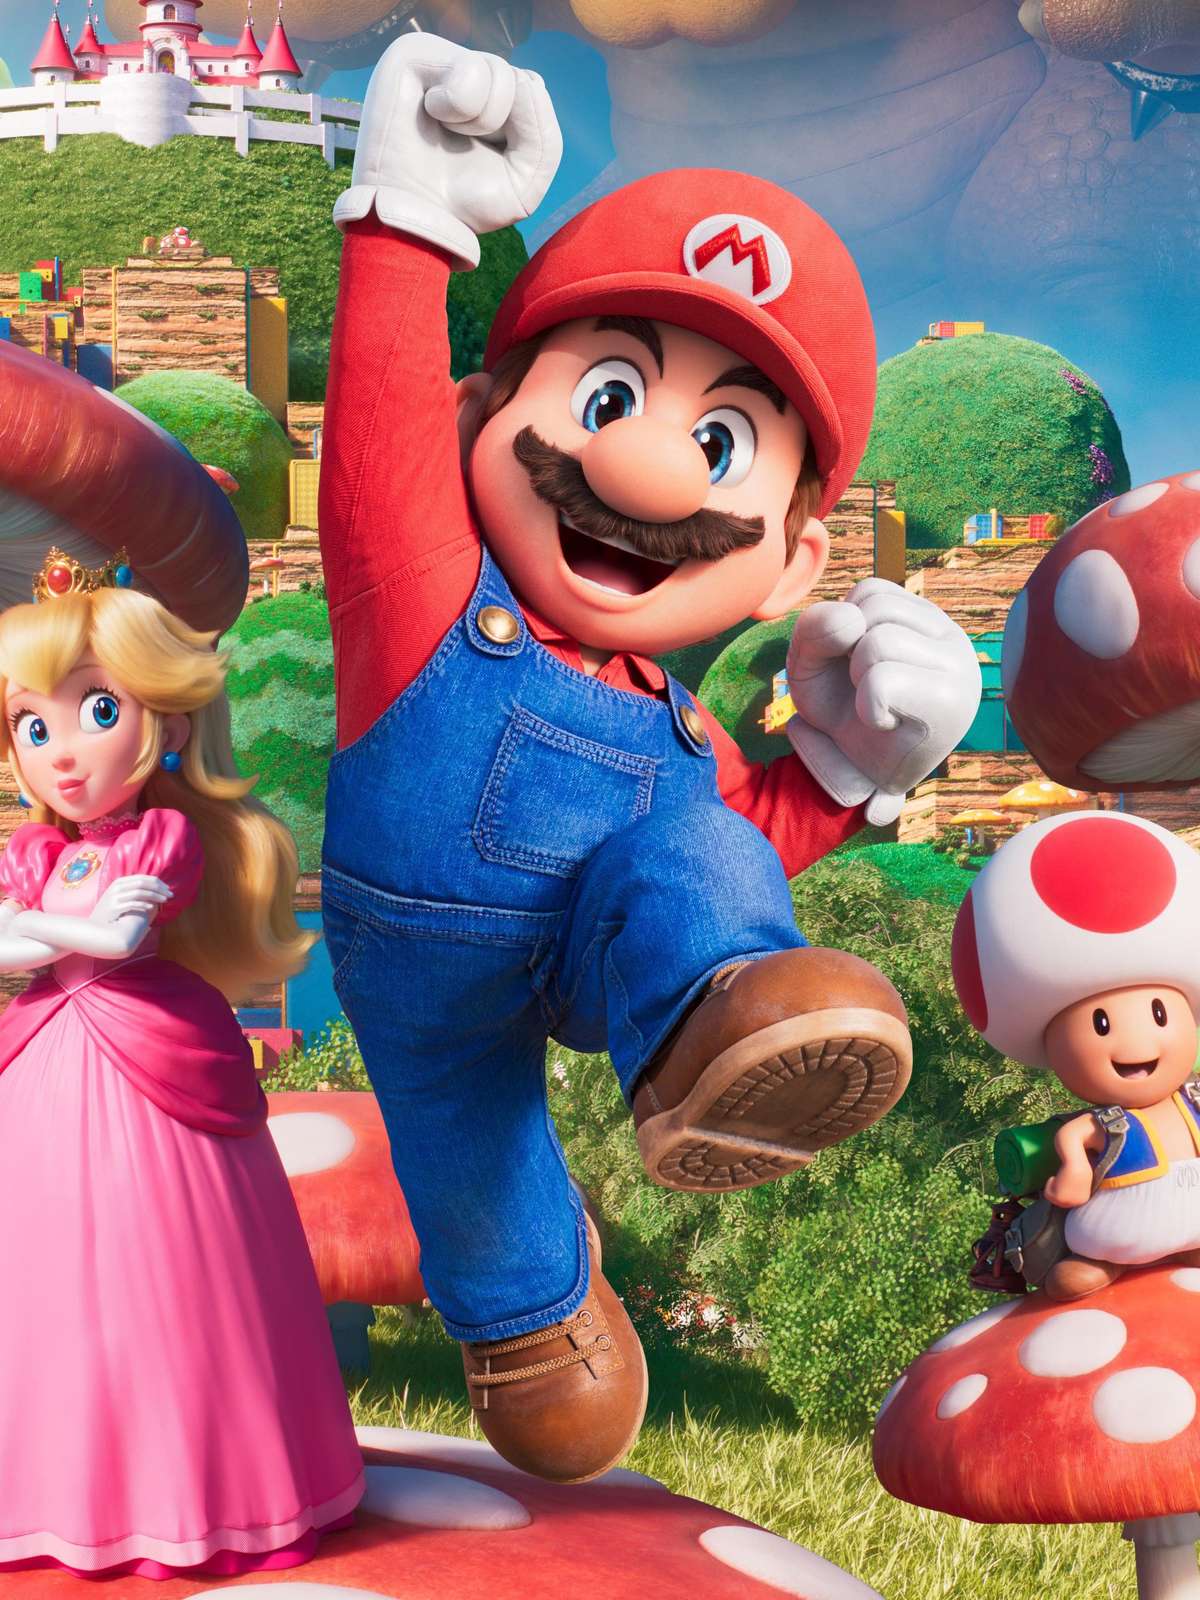 5 easter eggs do novo trailer de Super Mario Bros: O Filme